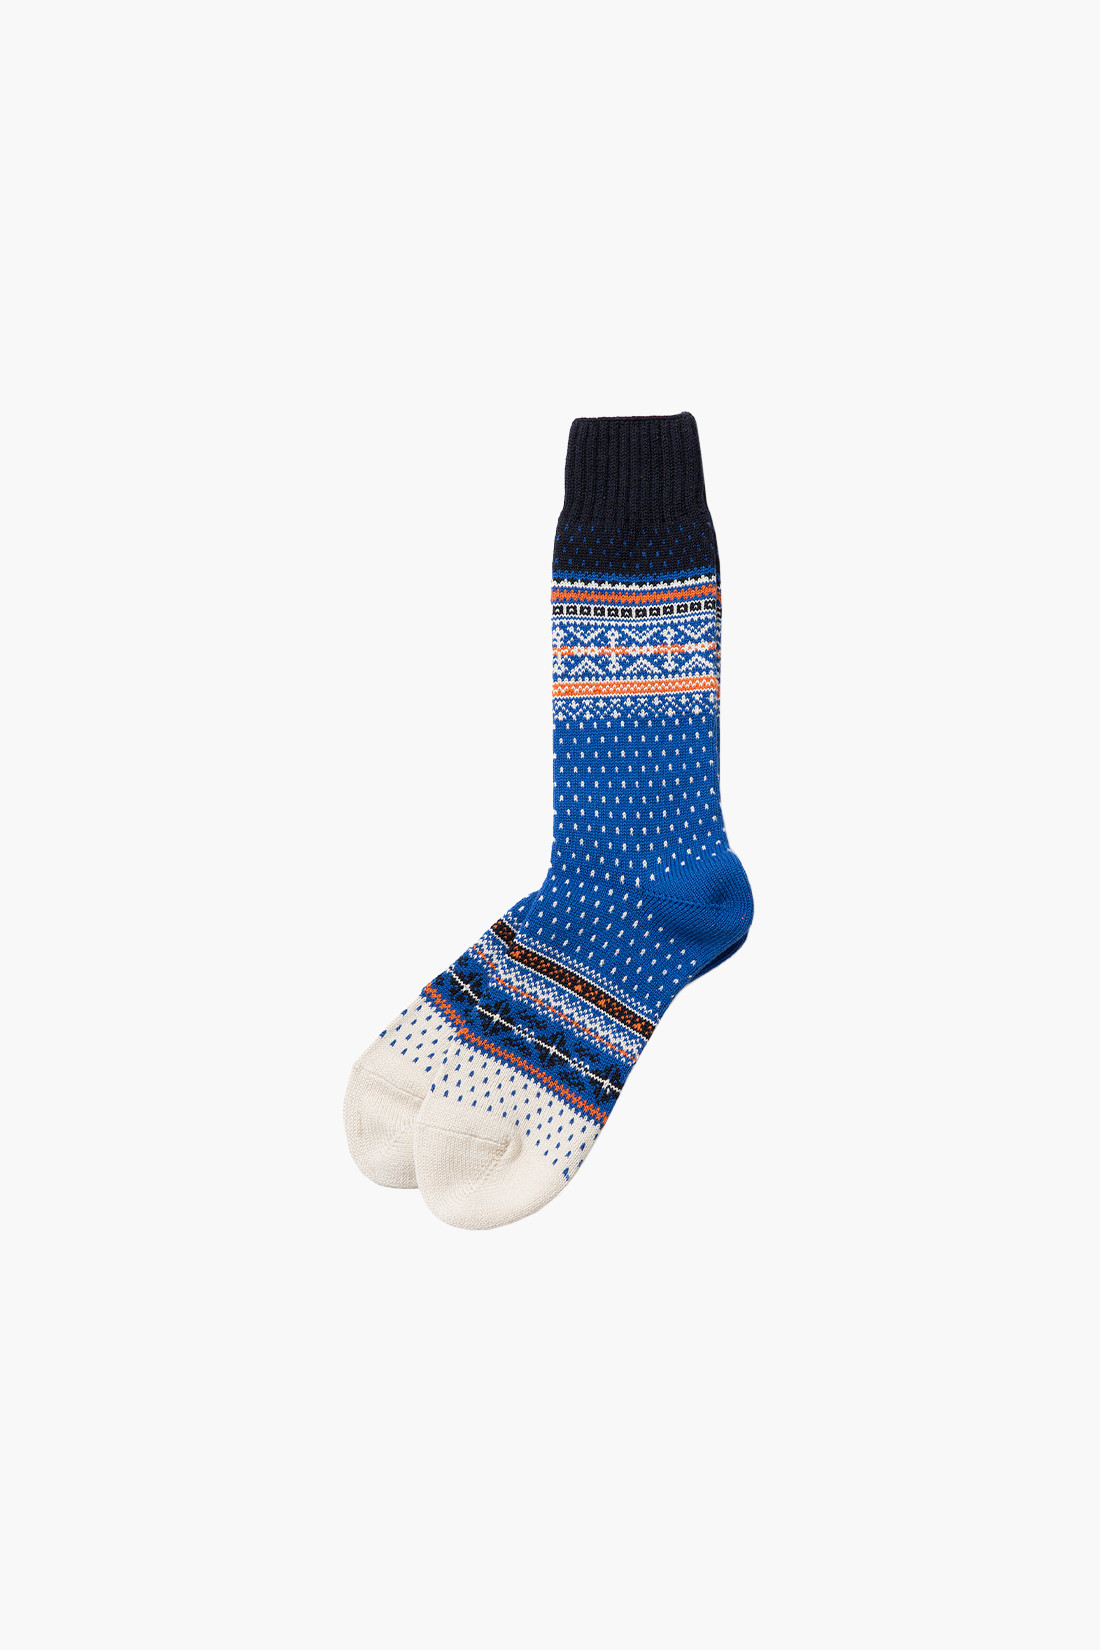 Nordic socks Blue/base